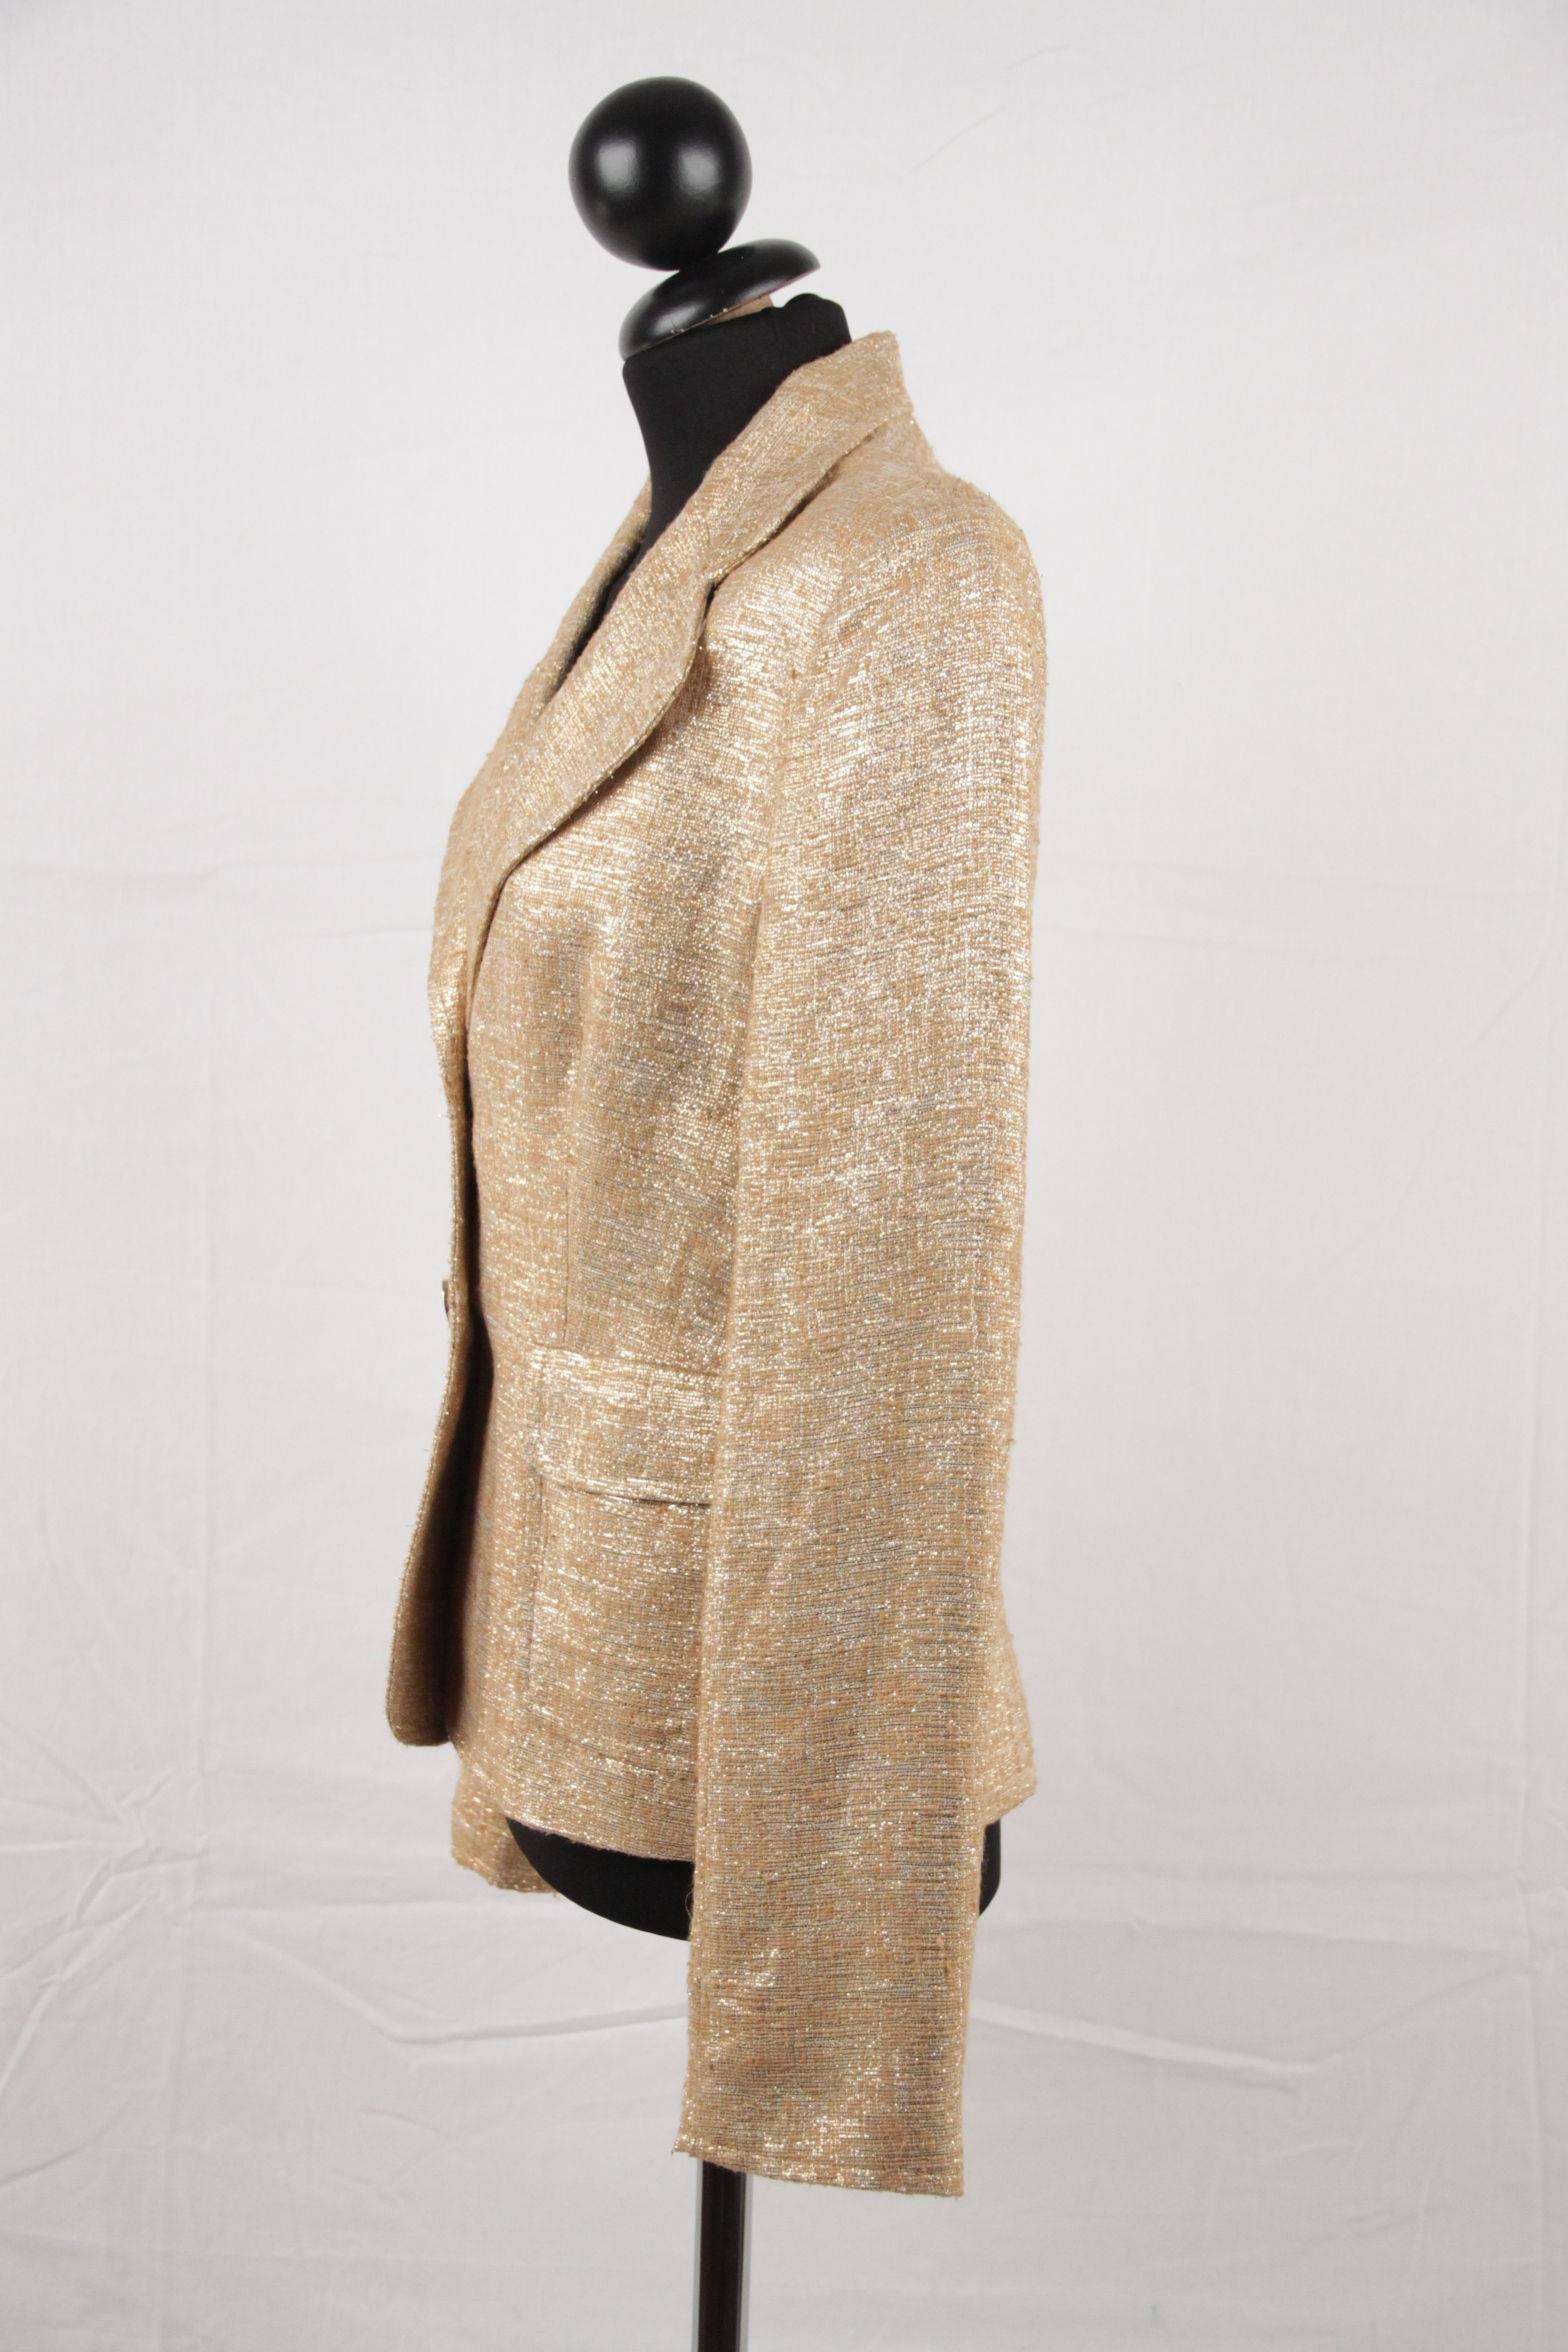 DOLCE & GABBANA Gold Tone METALLIC Woven Fabric BLAZER Jacket SIZE 42 3